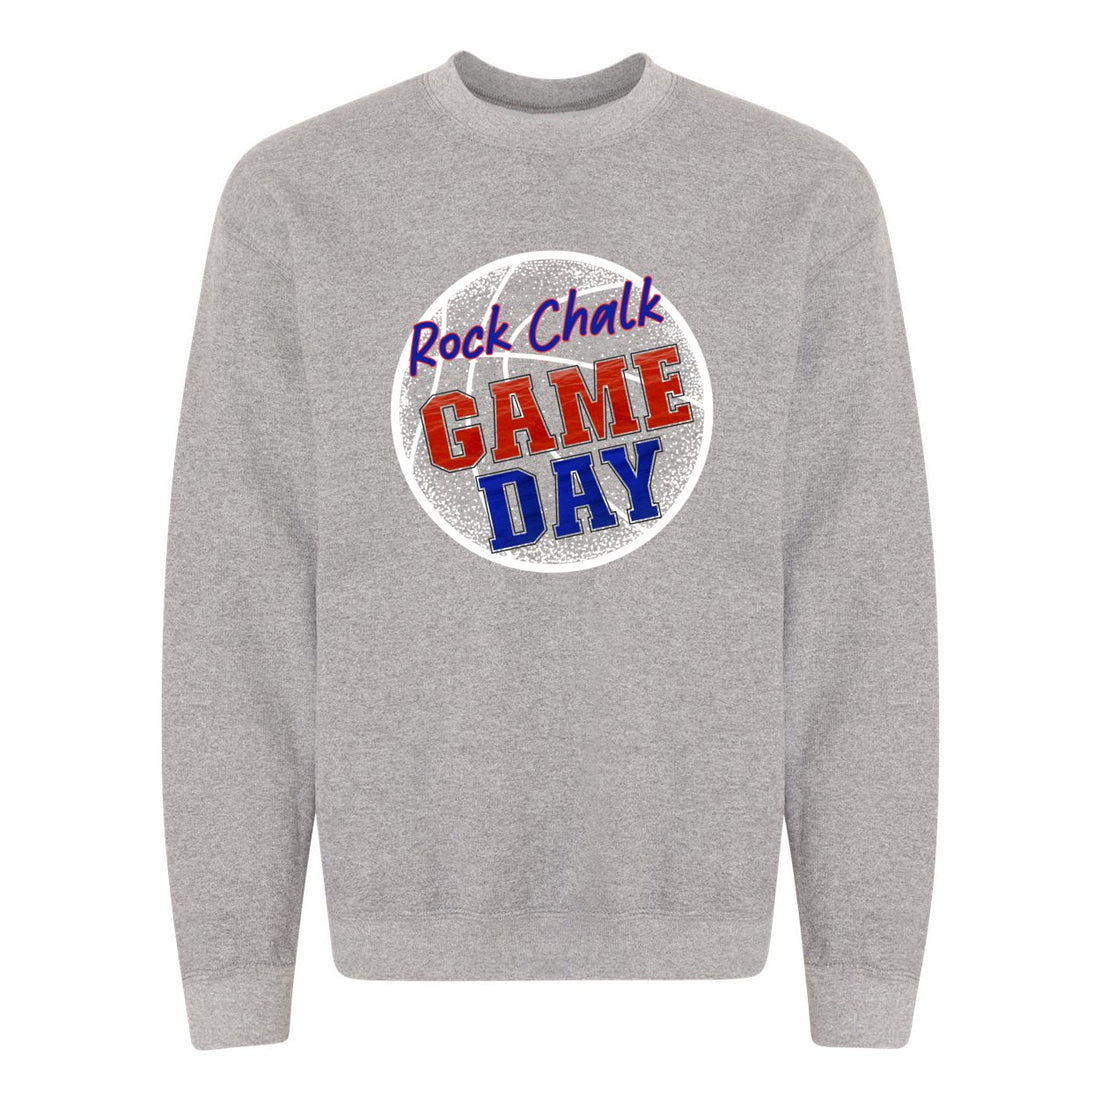 Hawks Basketball Game Day Crewneck Sweatshirt - Sweaters/Hoodies - Positively Sassy - Hawks Basketball Game Day Crewneck Sweatshirt